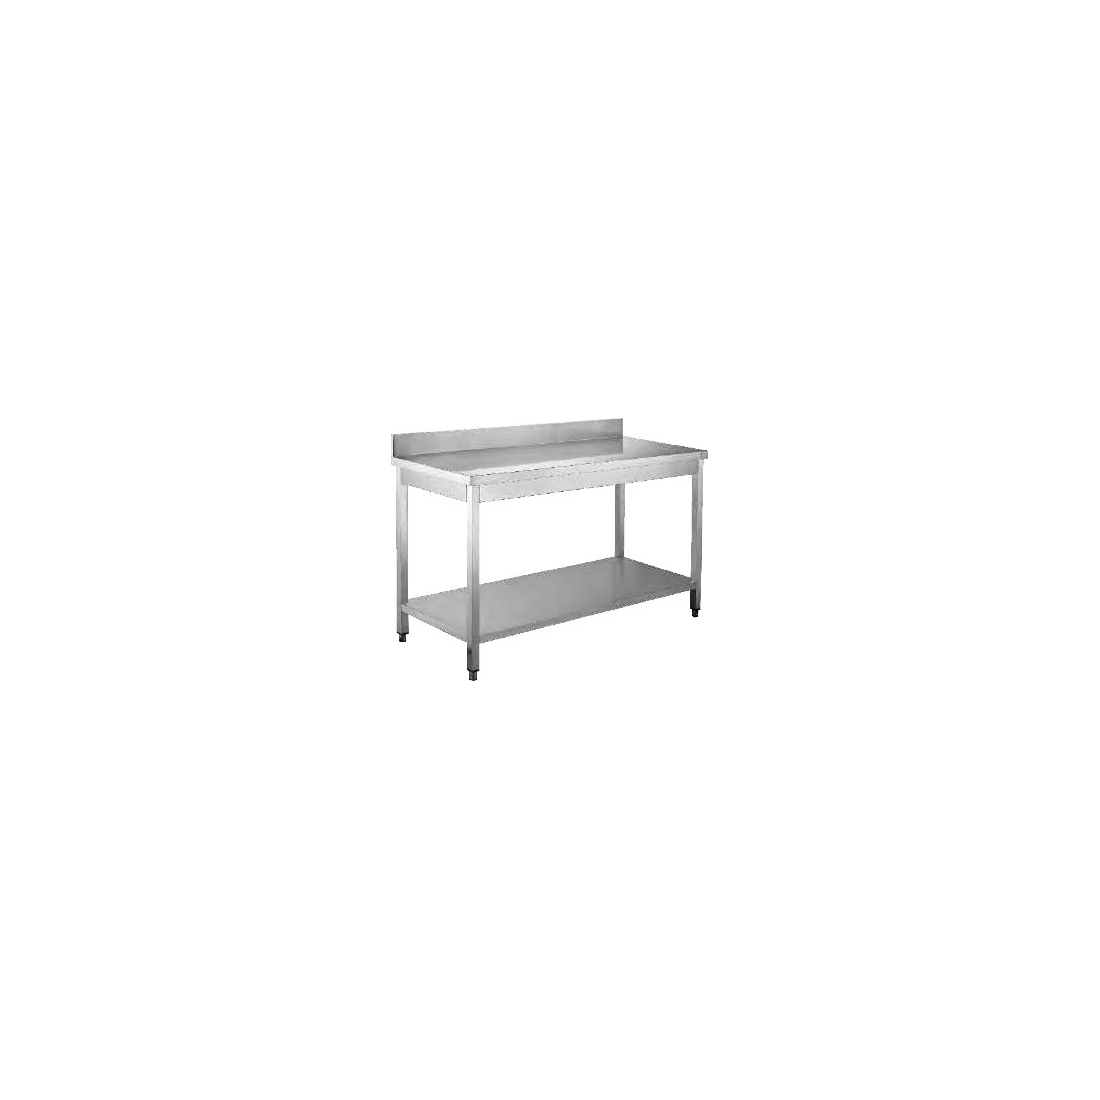 Stainless Steel Service Table with backsplash - undershelf  1m (WTD-102B)